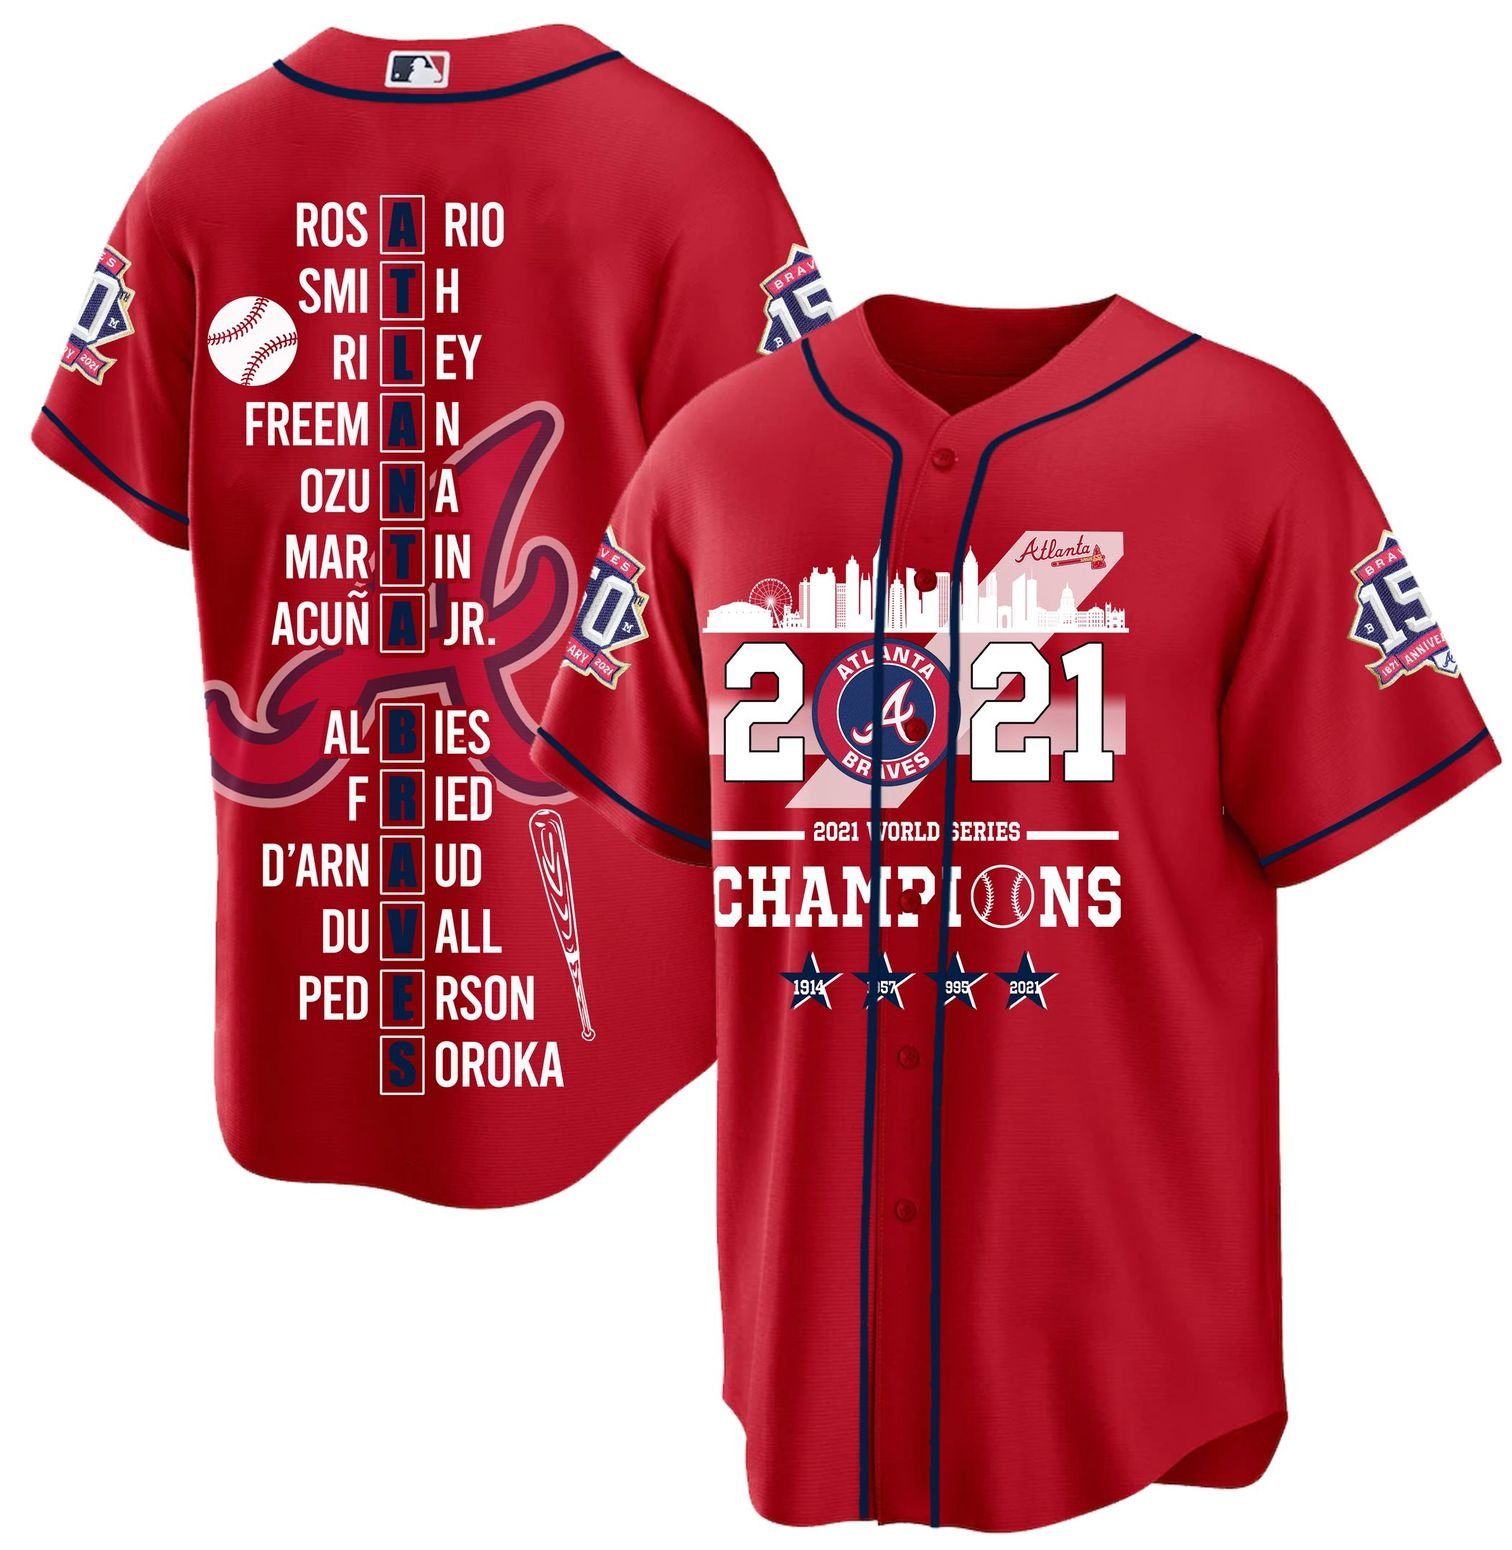 NEW 2021 Word series champion Atlanta Braves baseball jersey 2